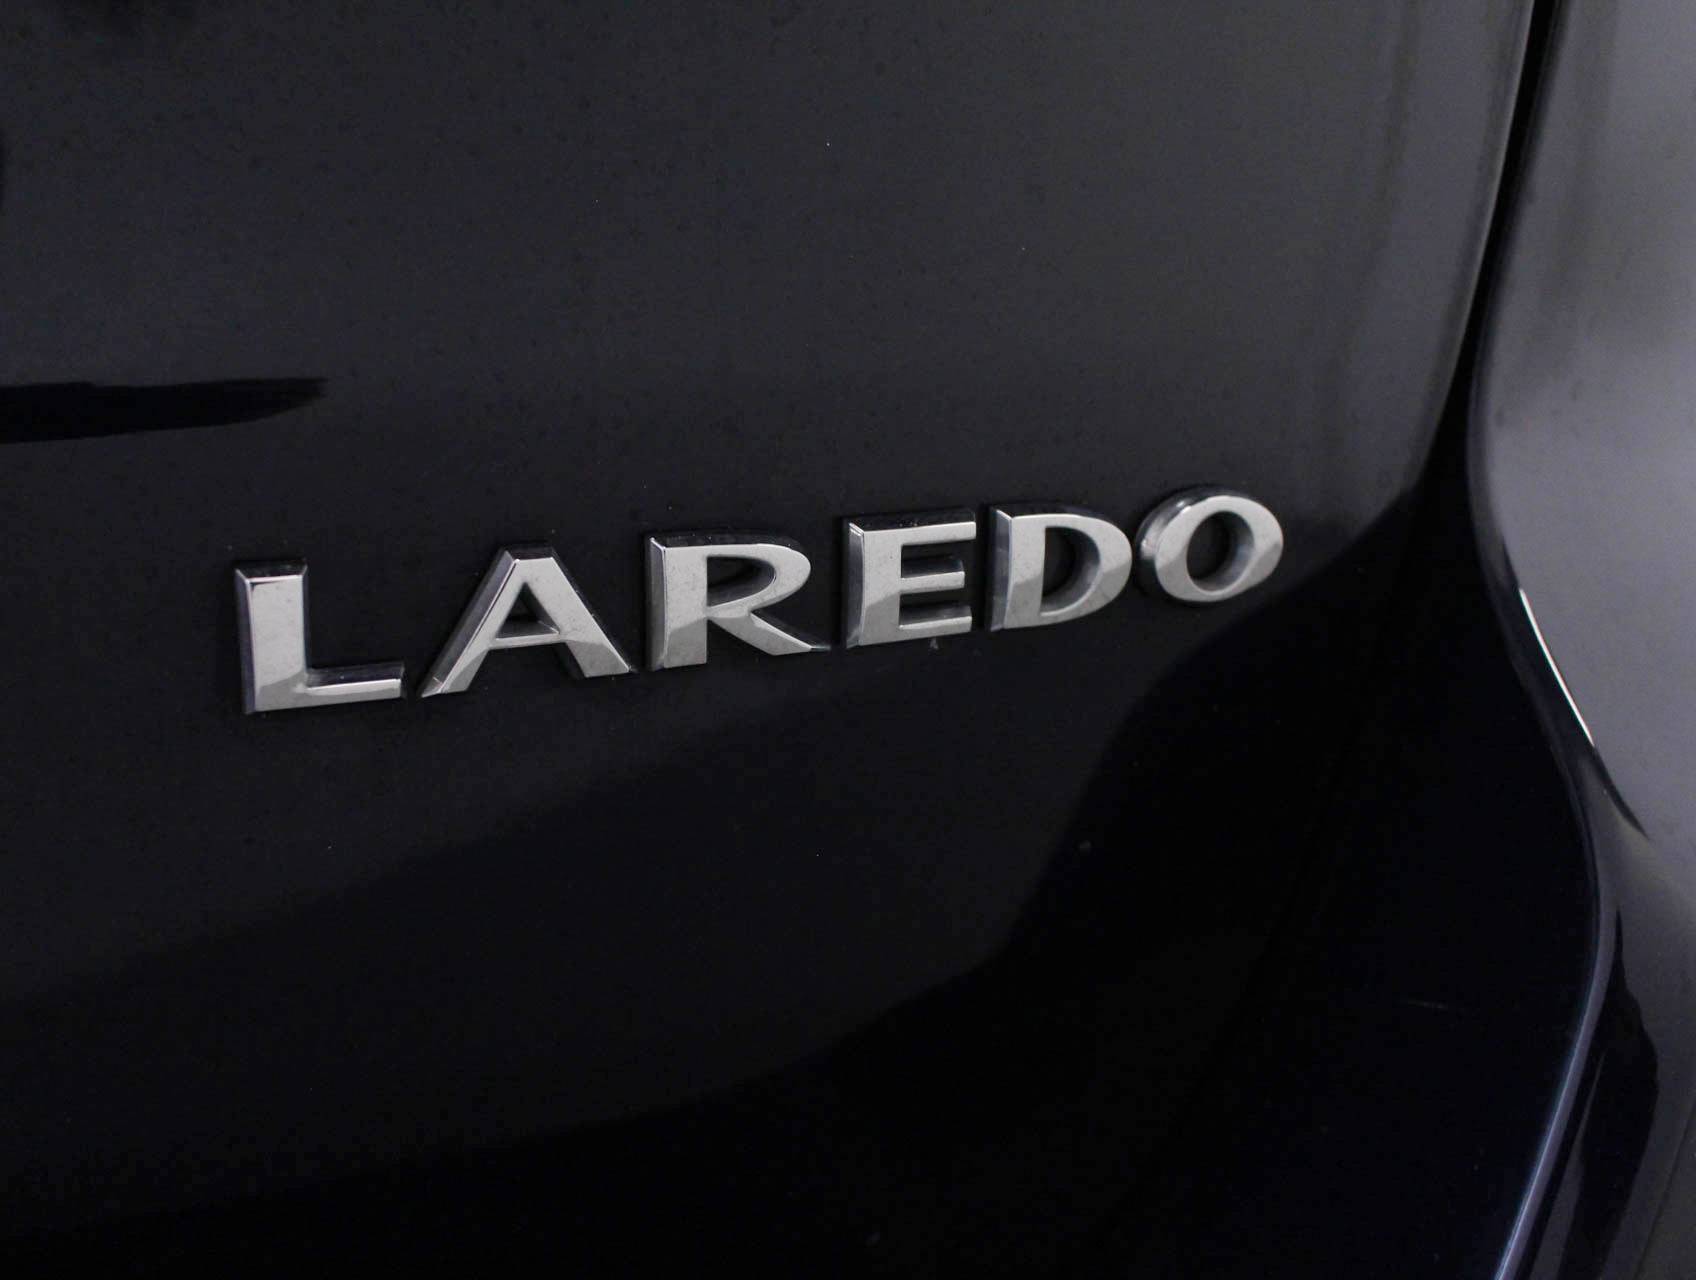 Florida Fine Cars - Used JEEP GRAND CHEROKEE 2015 MARGATE LAREDO